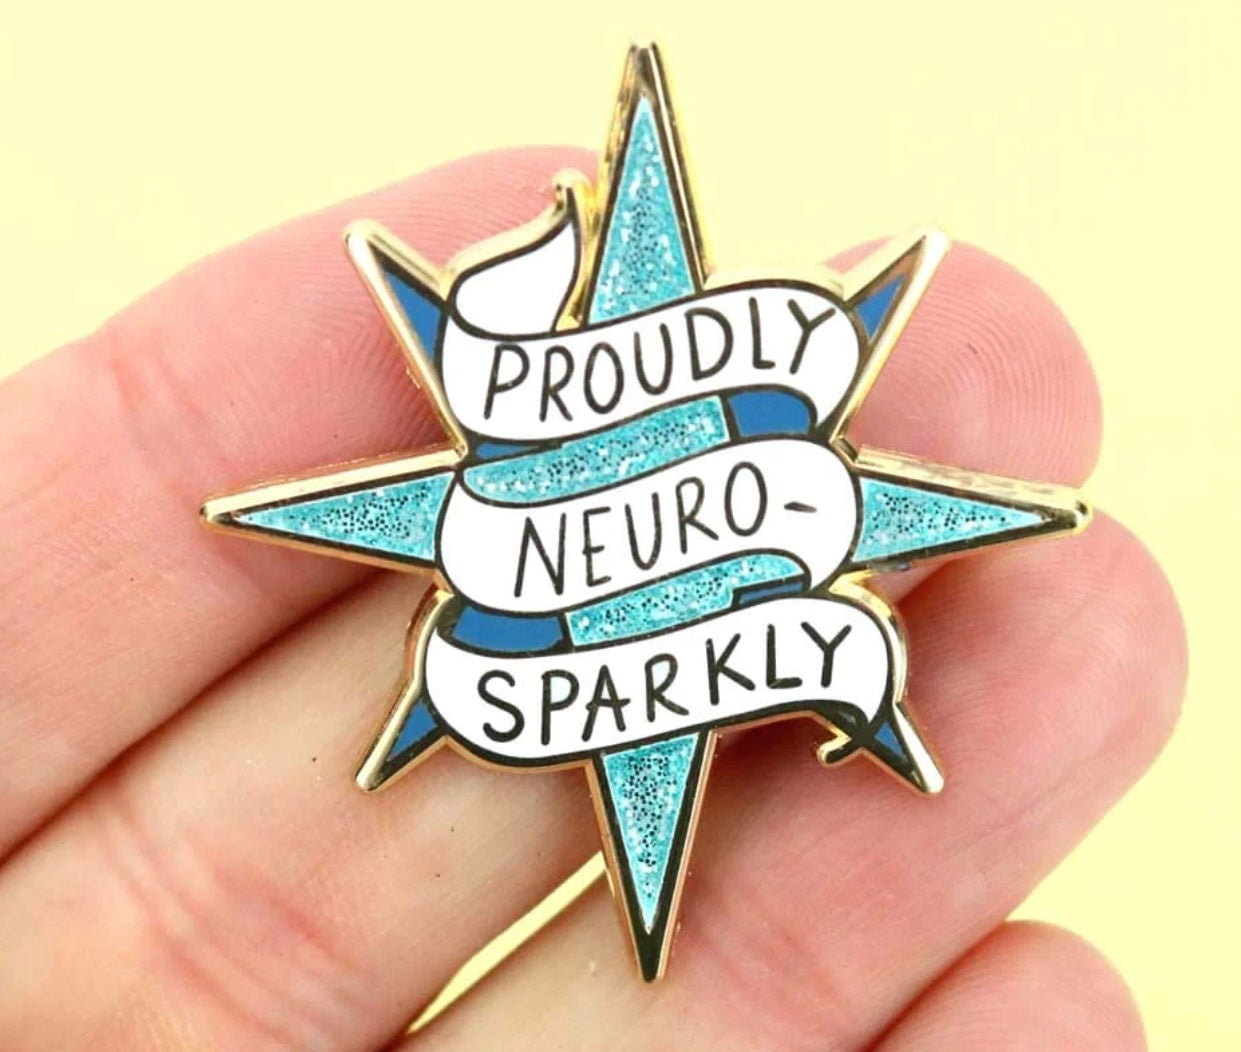 Jubly-Umph Lapel Pin - Proudly Neuro-Sparkly